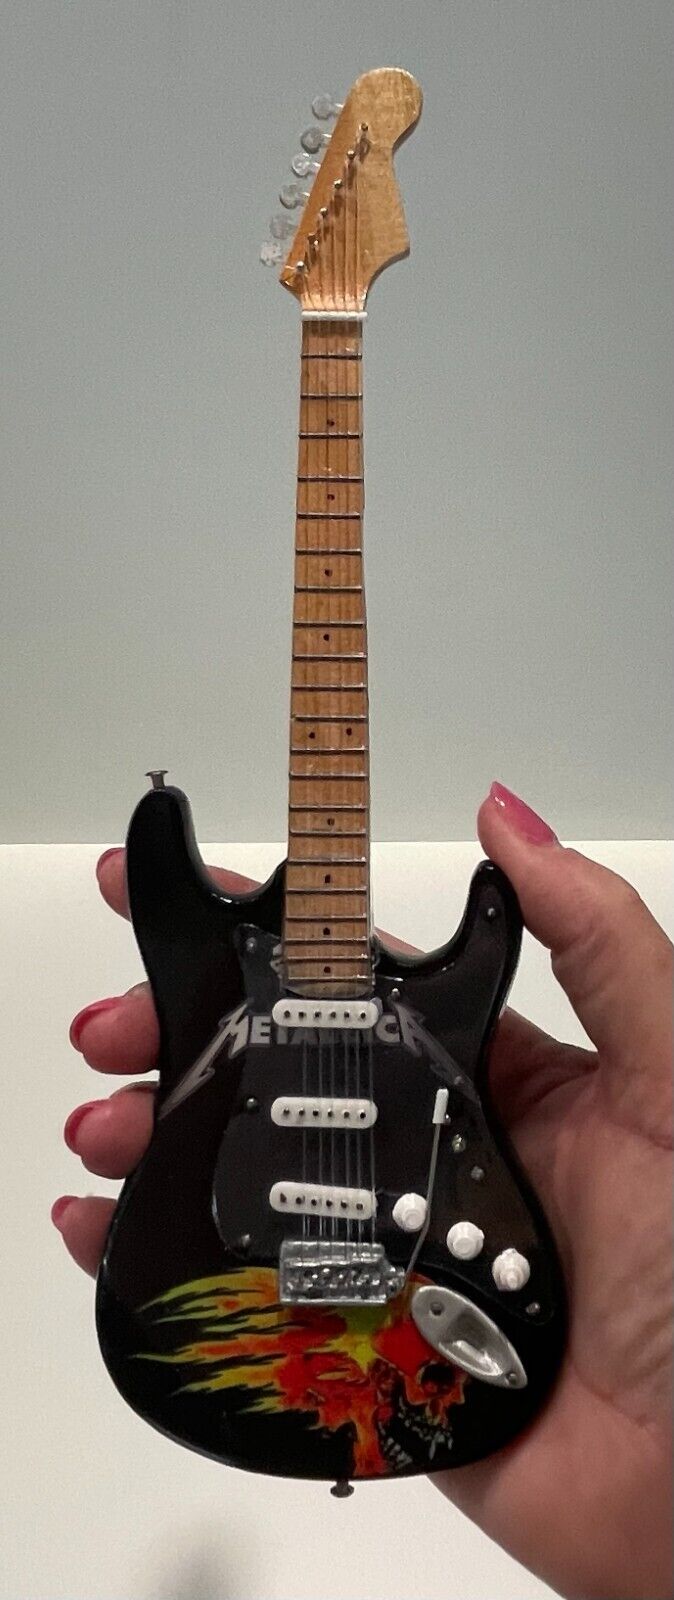 Metallica Miniature Guitar Brand New in Gift Box 